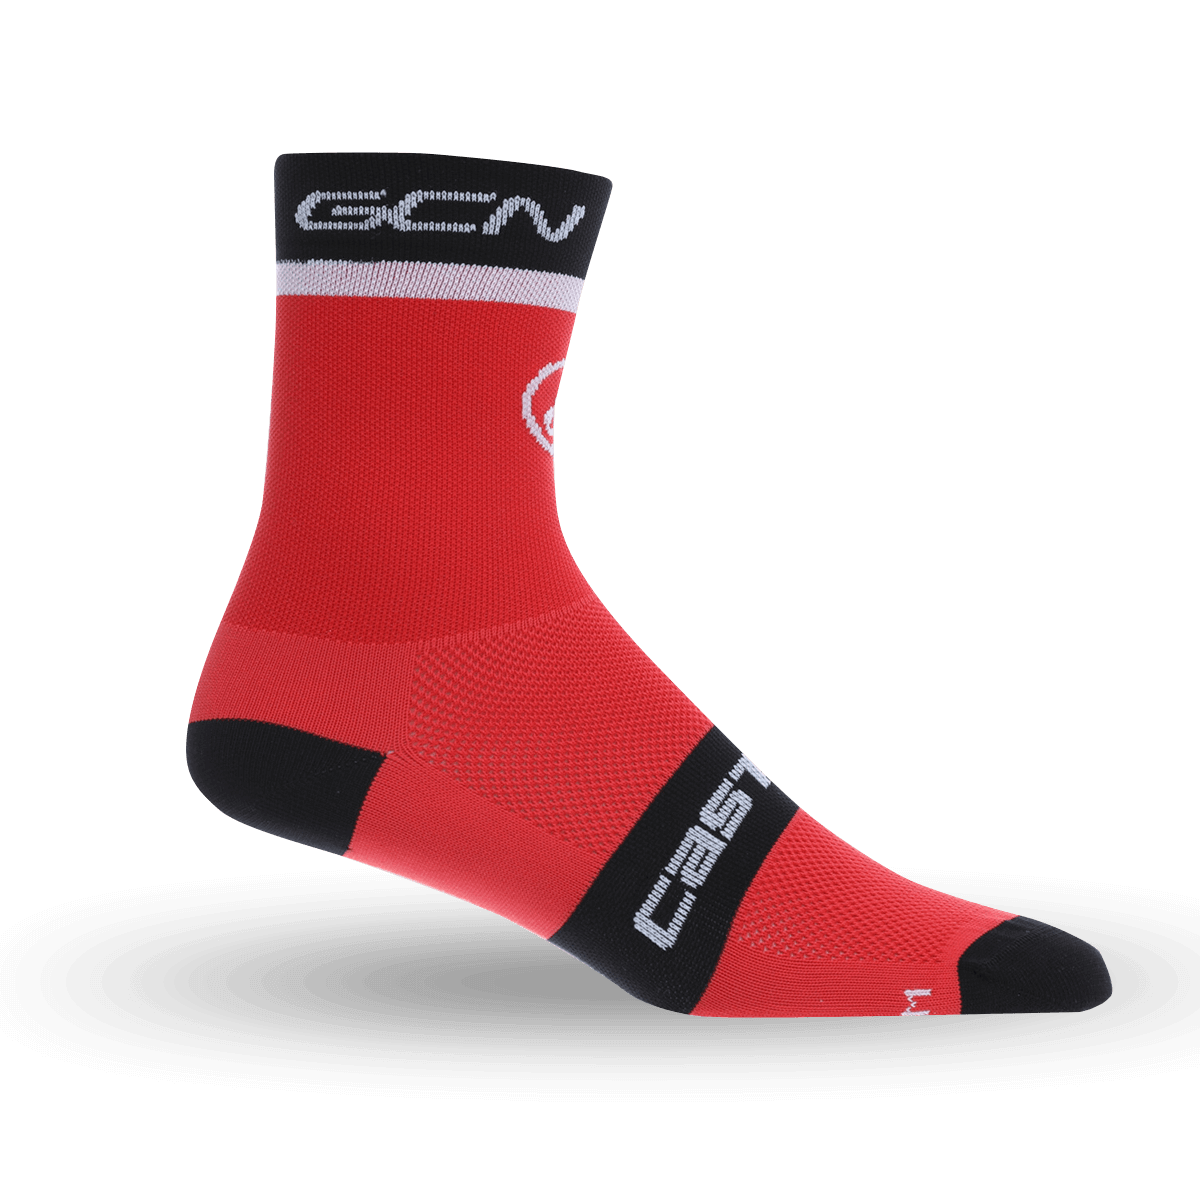 R17034 Castelli 2017 Rosso Corsa 13 Cycling Sock